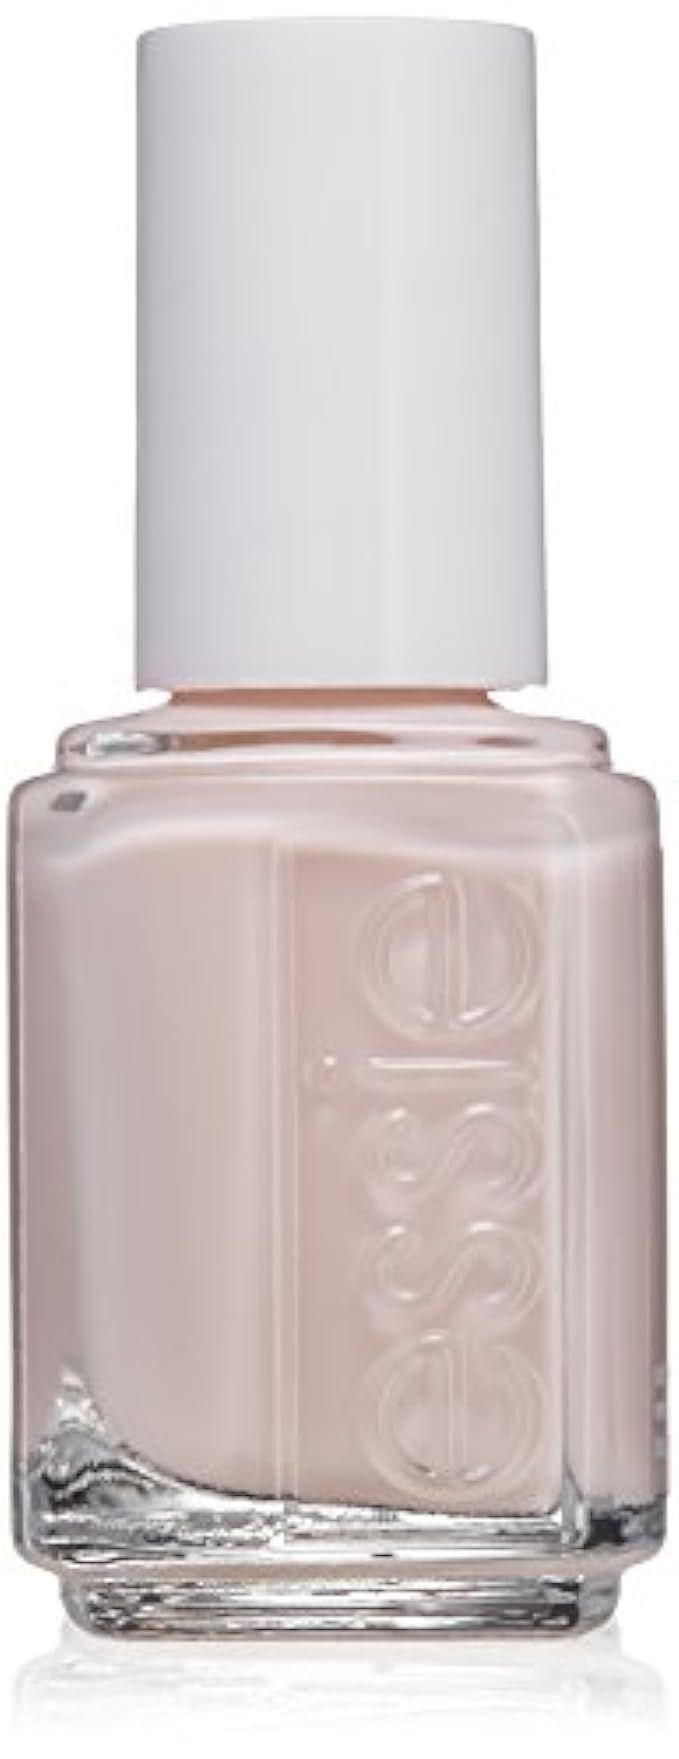 essie nail polish, ballet slippers, pink nail polish, 0.46 fl. oz. | Amazon (US)